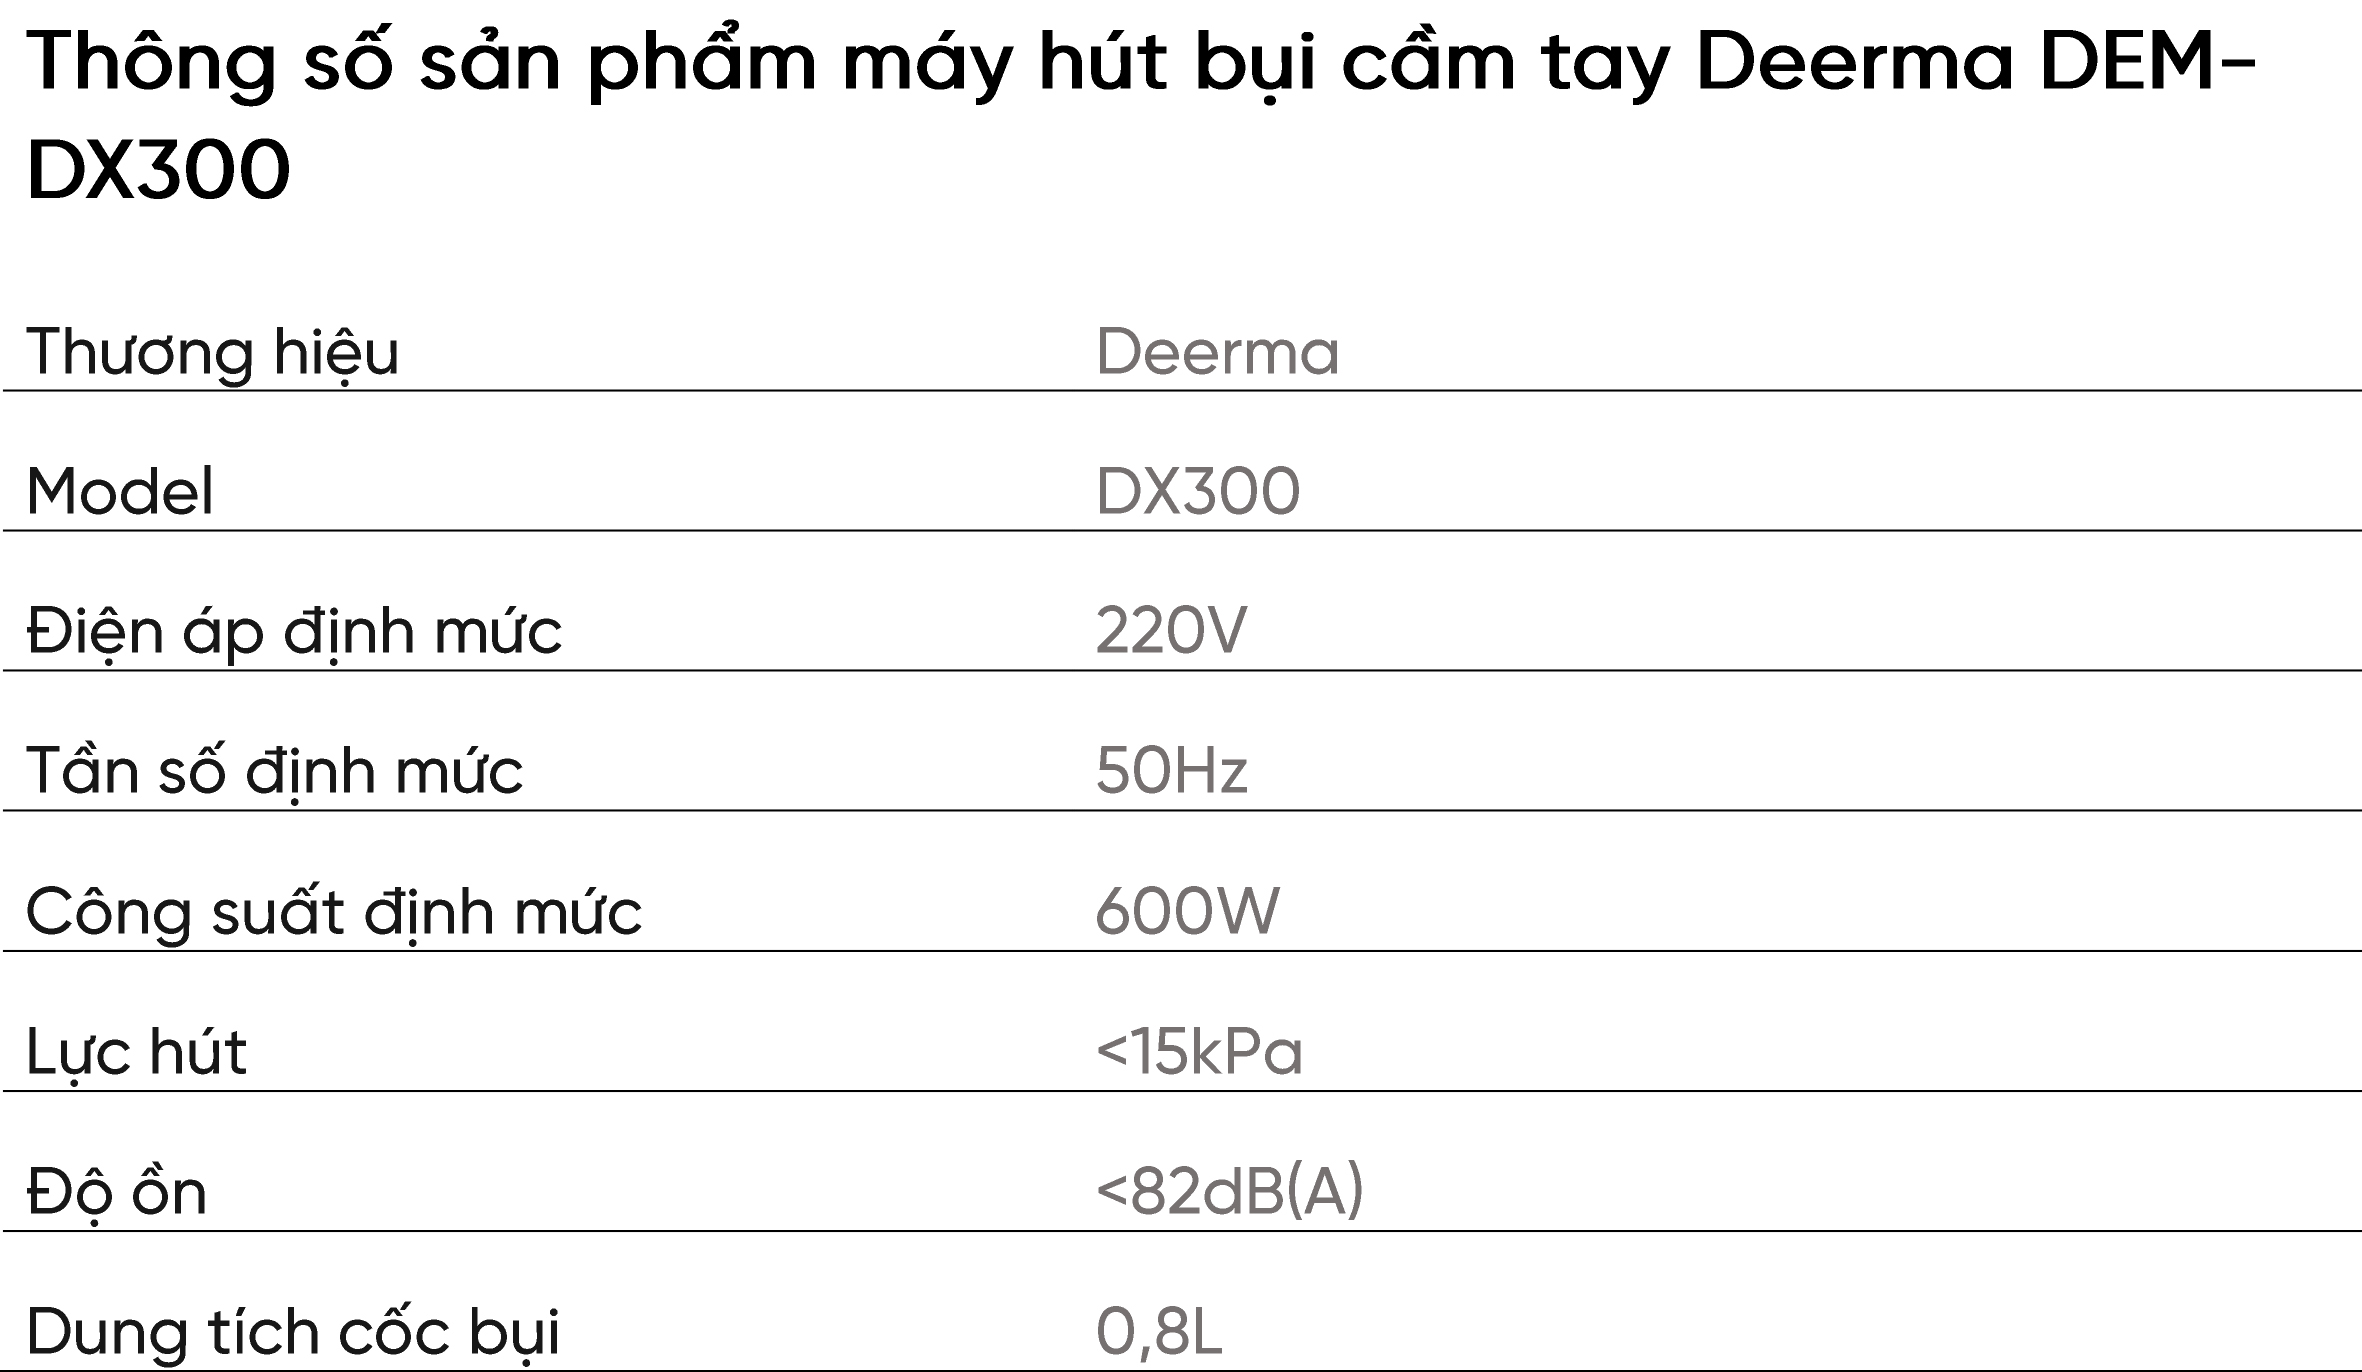 Máy hút bụi cầm tay Deerma DEM-DX300